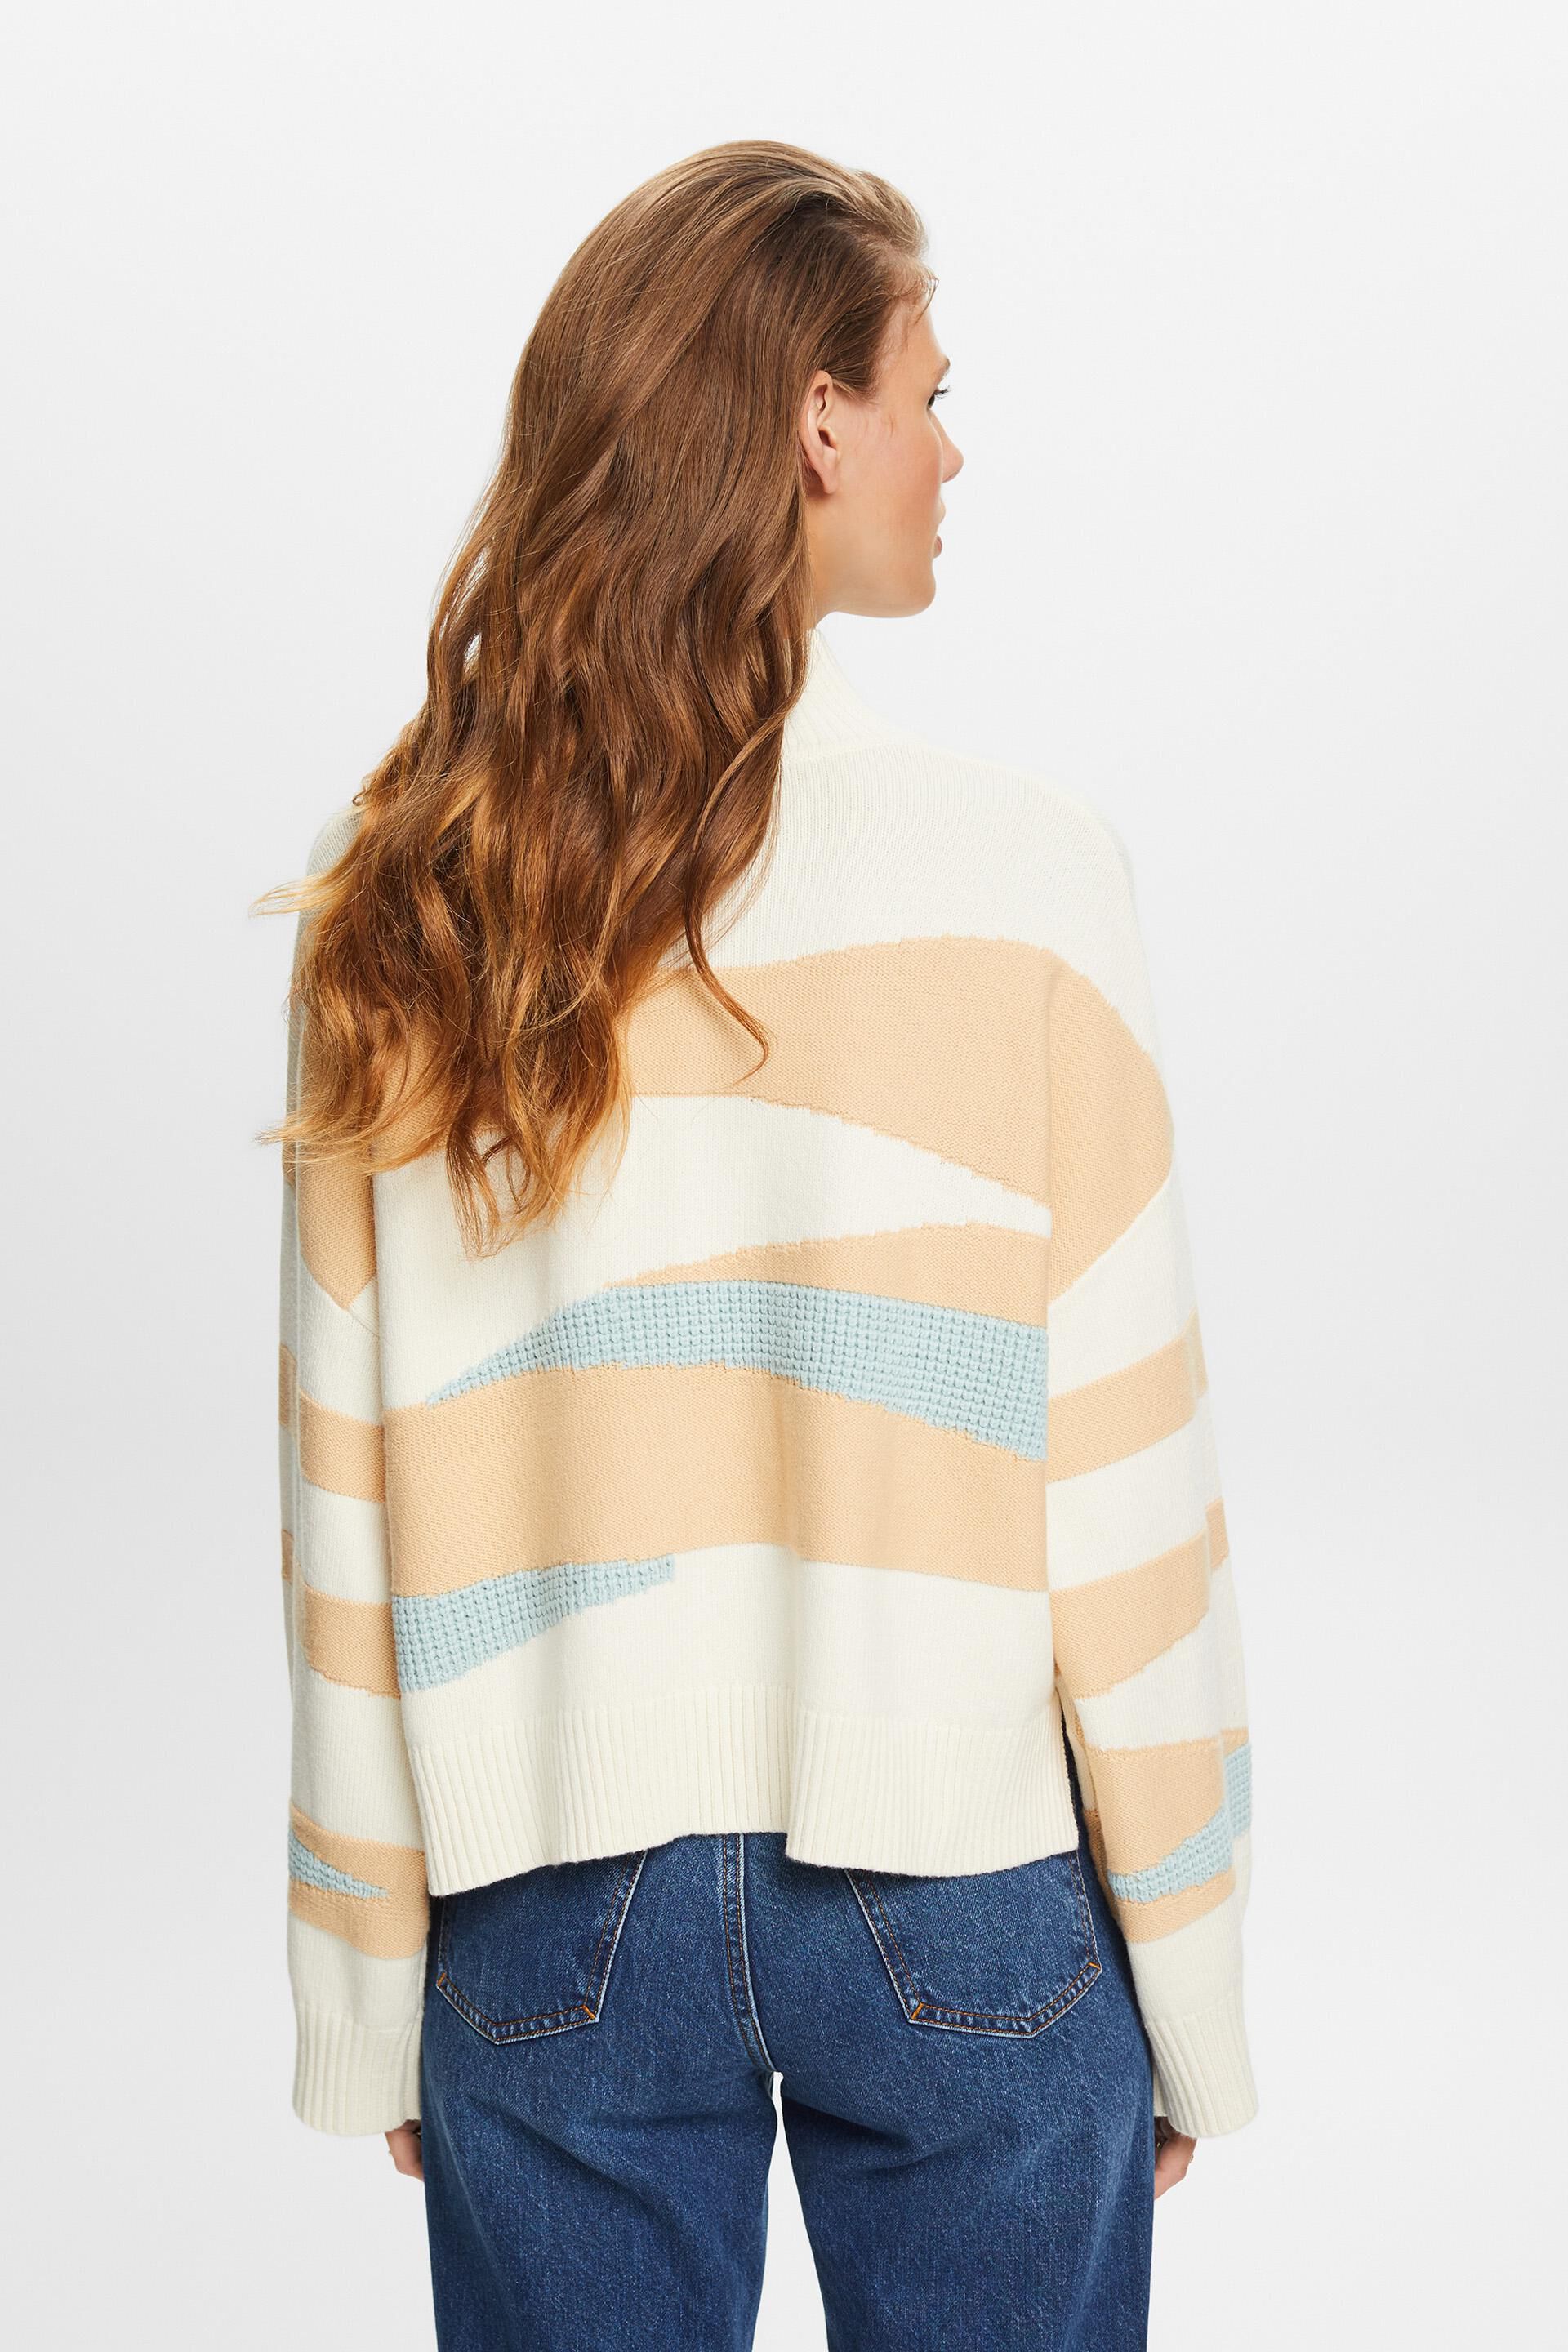 ESPRIT - Jacquard-Pullover aus Wollmix in unserem Online Shop